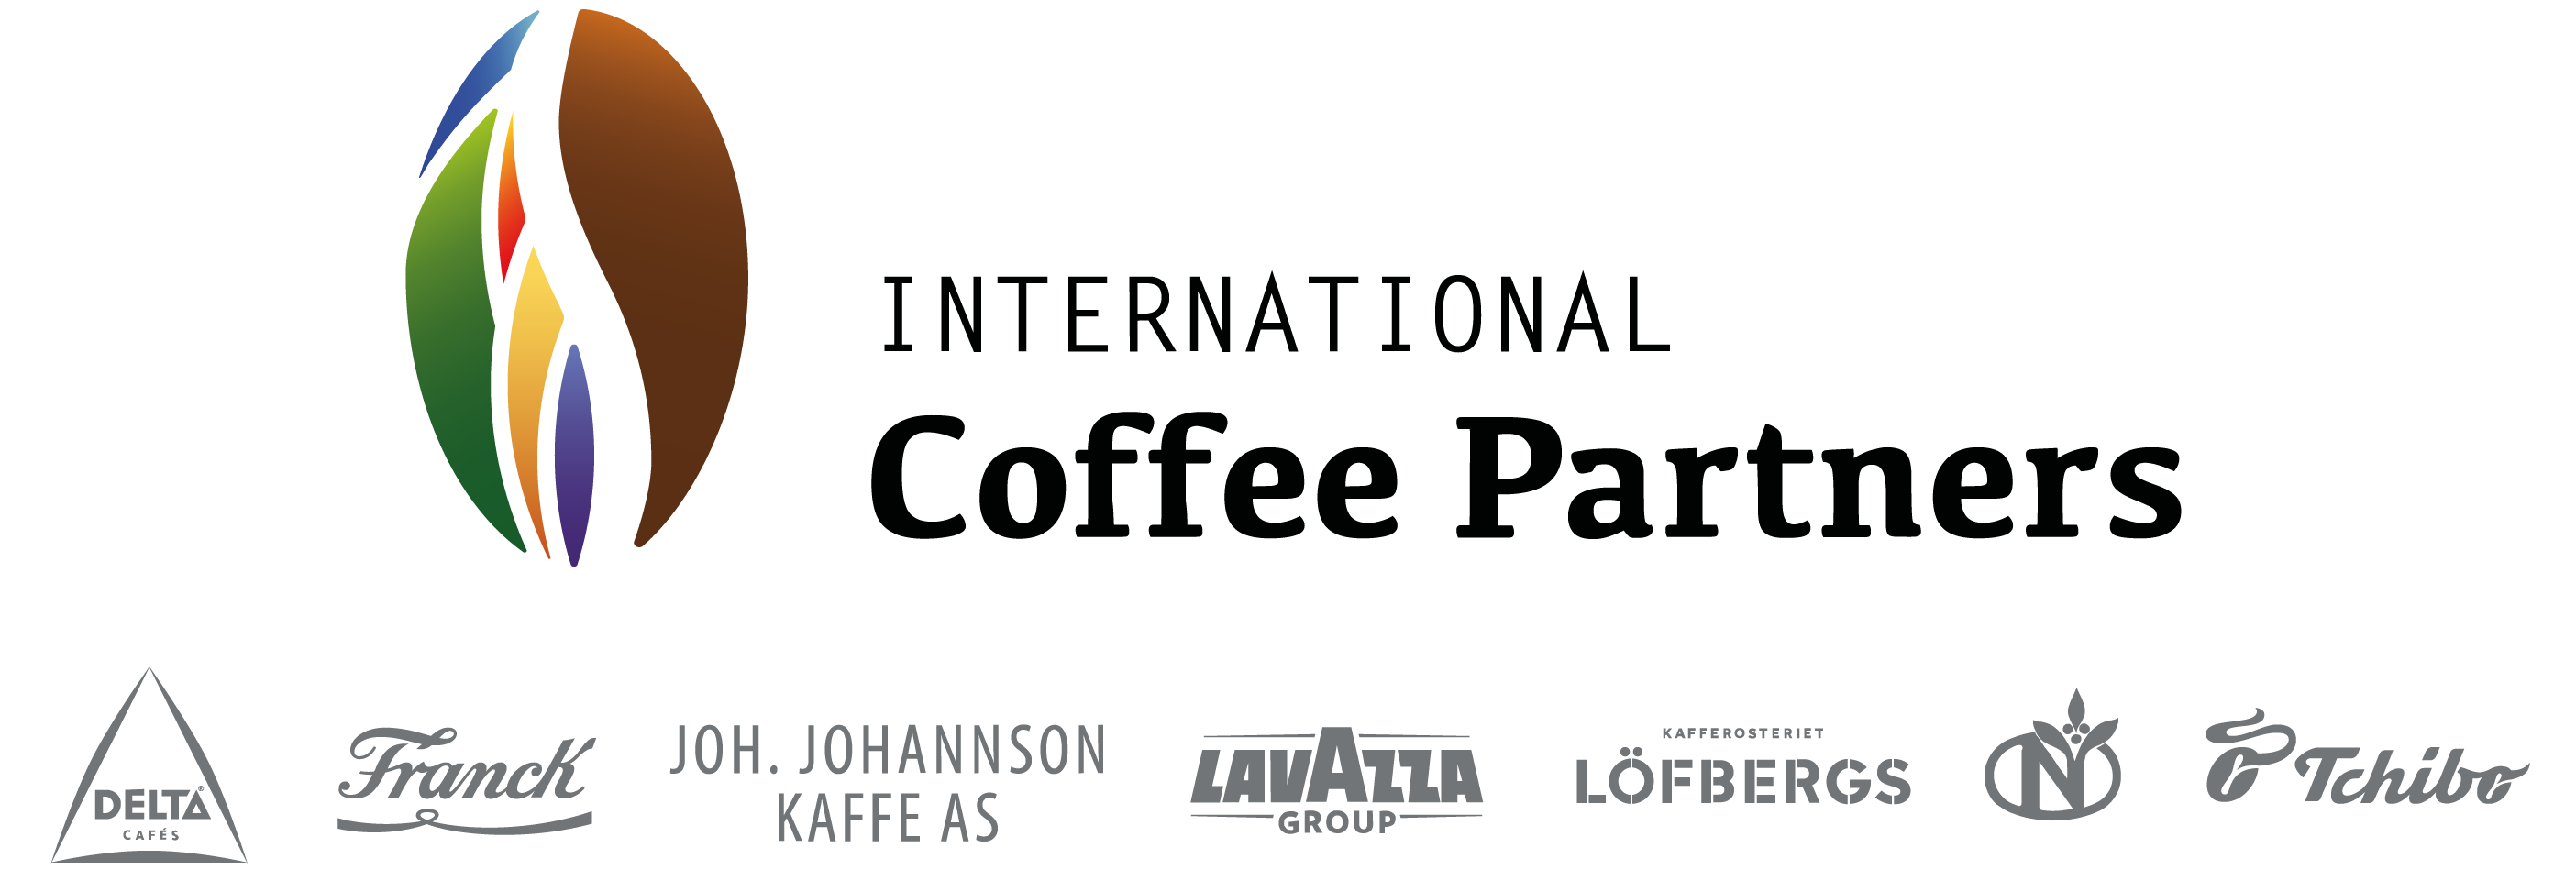 International Coffee Partners